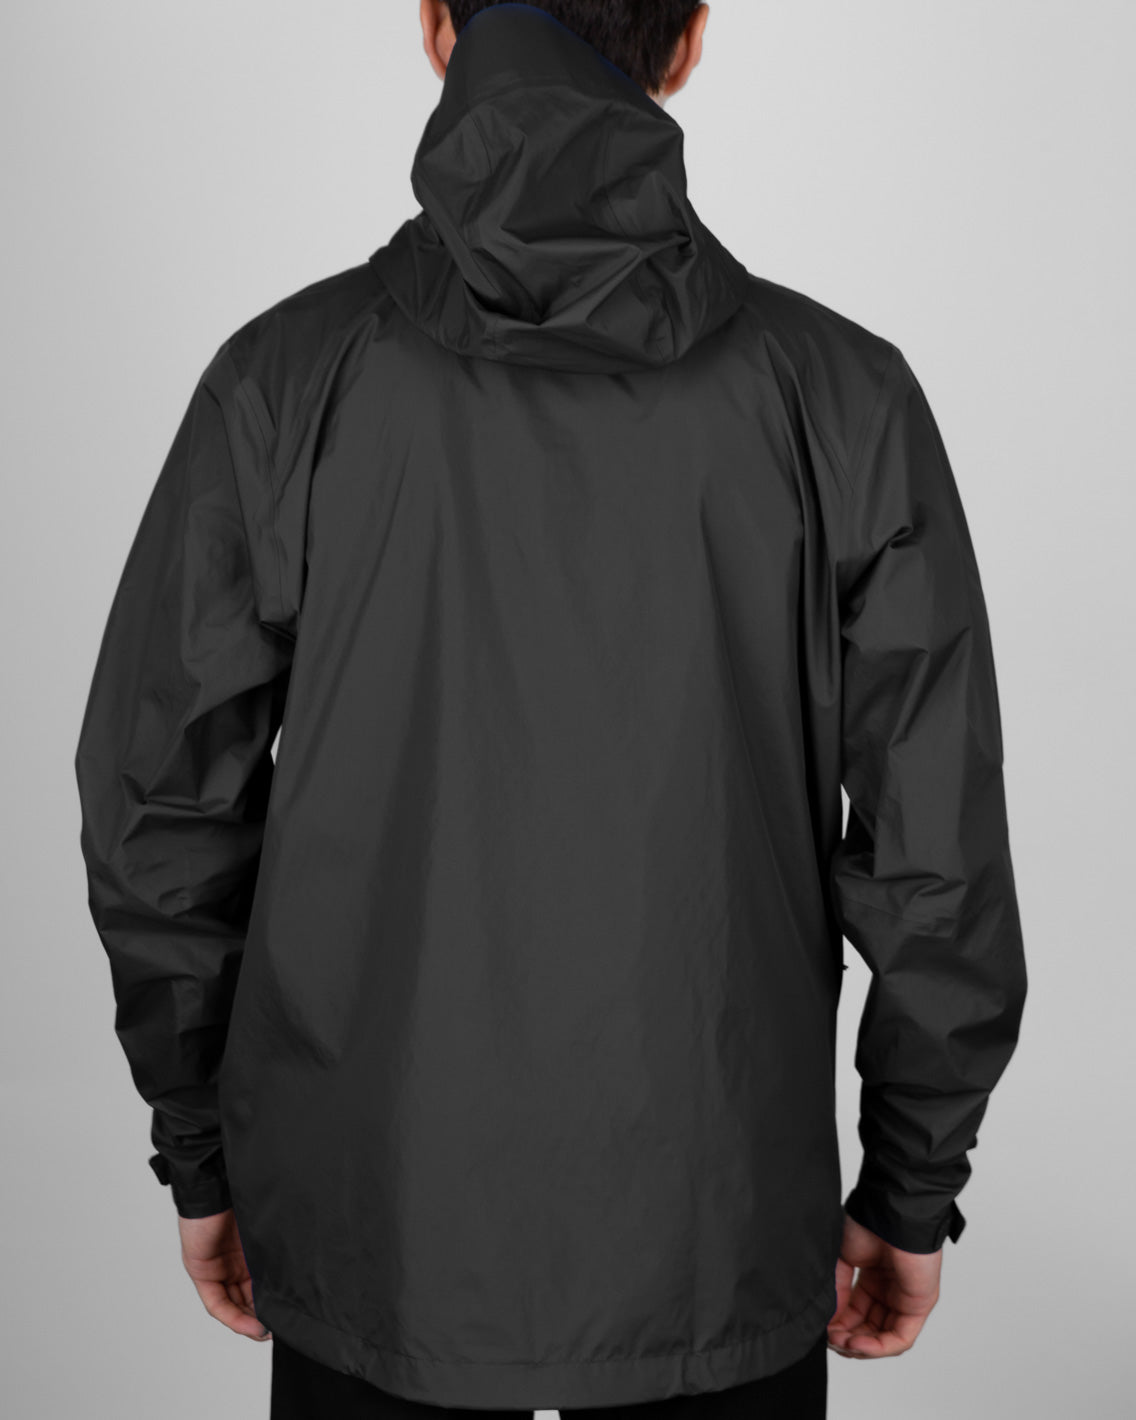 Patagonia - M's Torrentshell 3L Jacket - Black